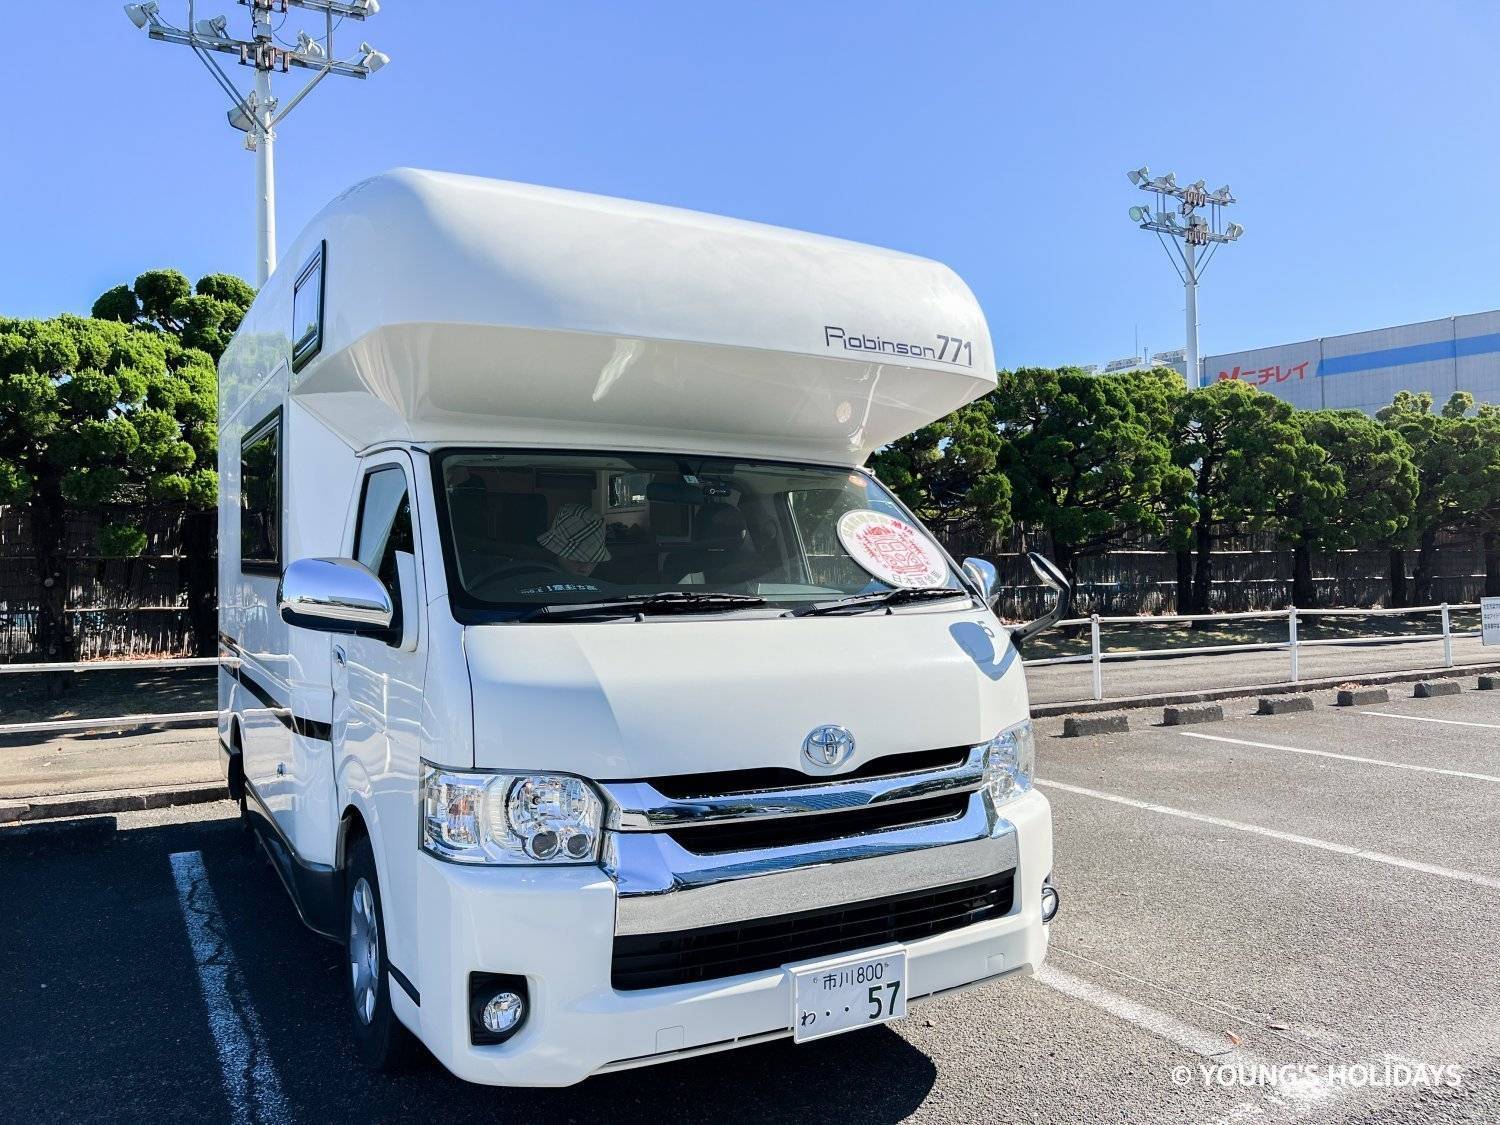 Young's Holidays 【Tokyo】Japan Rental 7 People Caravan RV Road Trip Experience (CRB771) 3